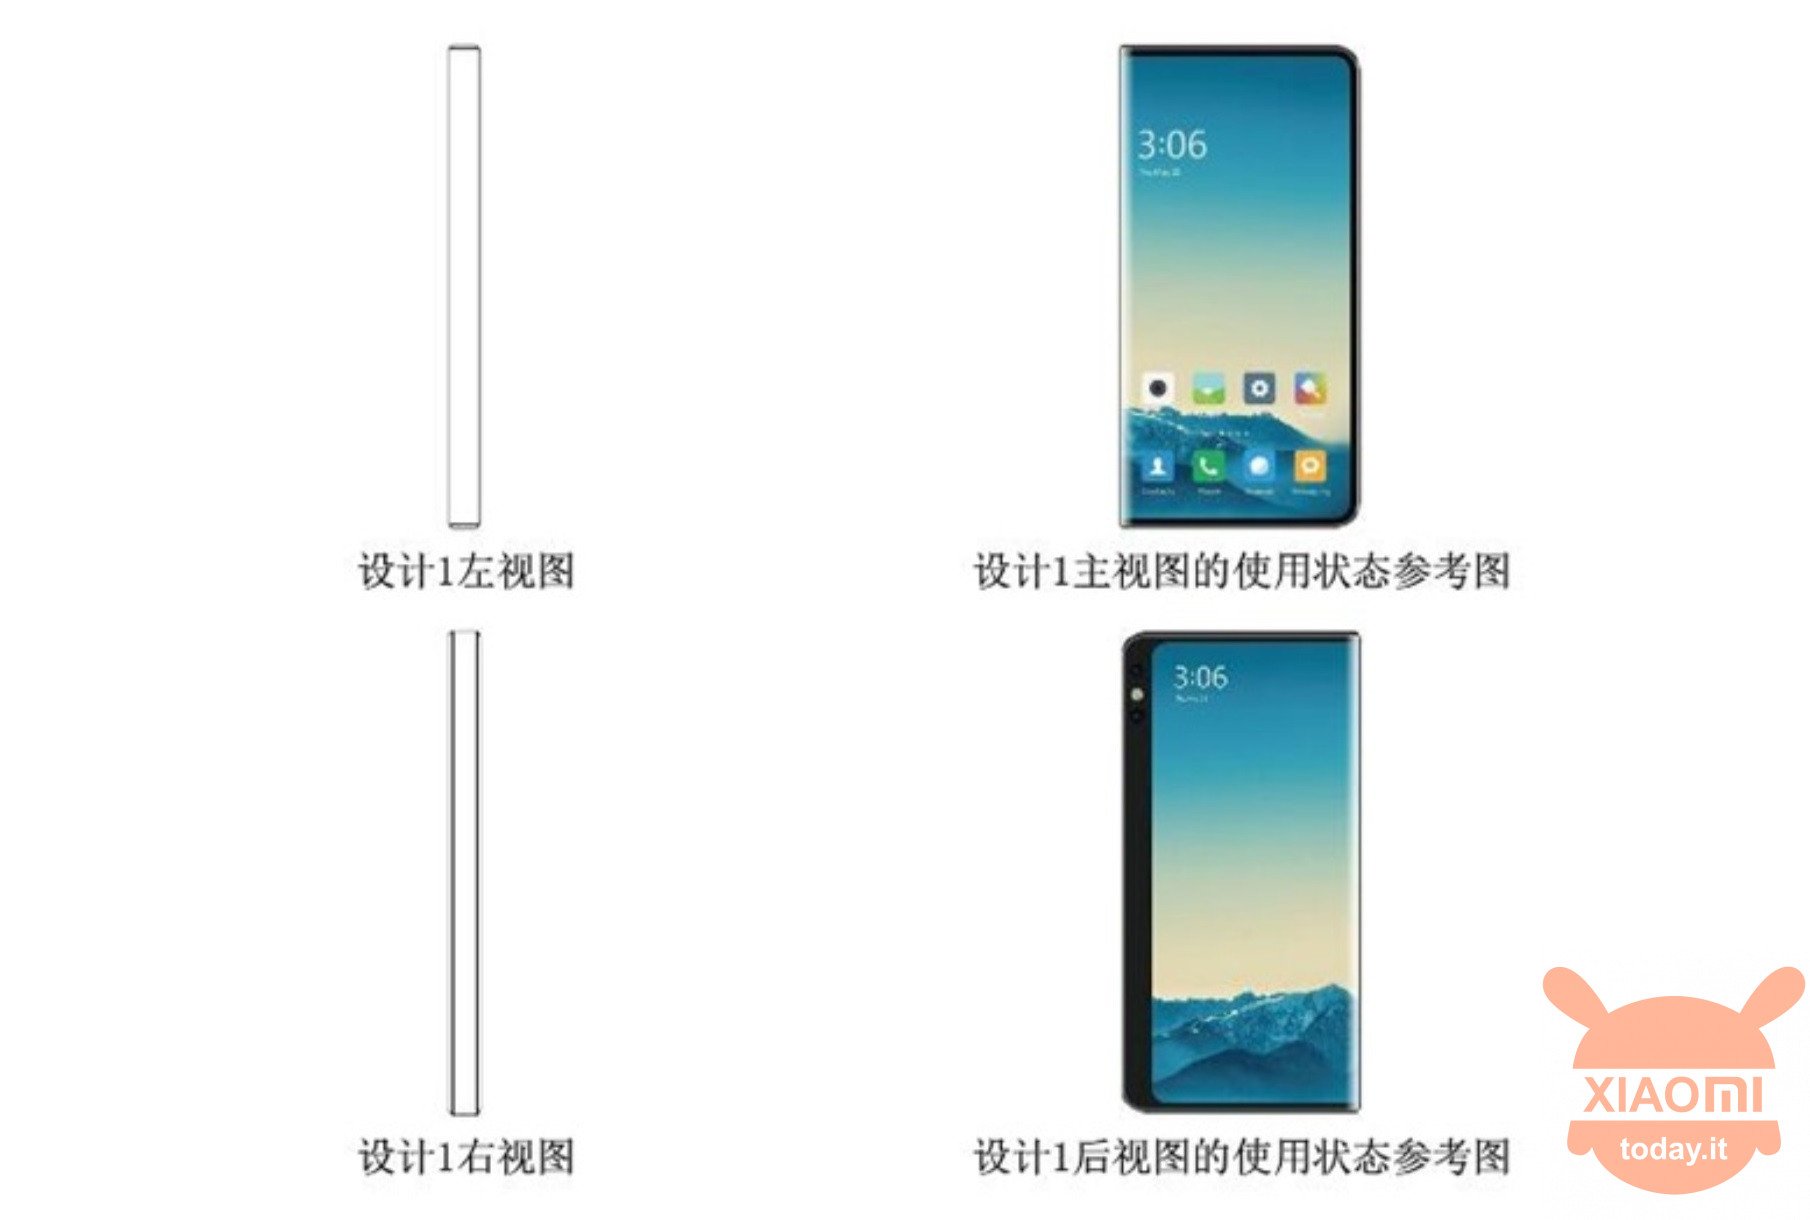 Xiaomi display